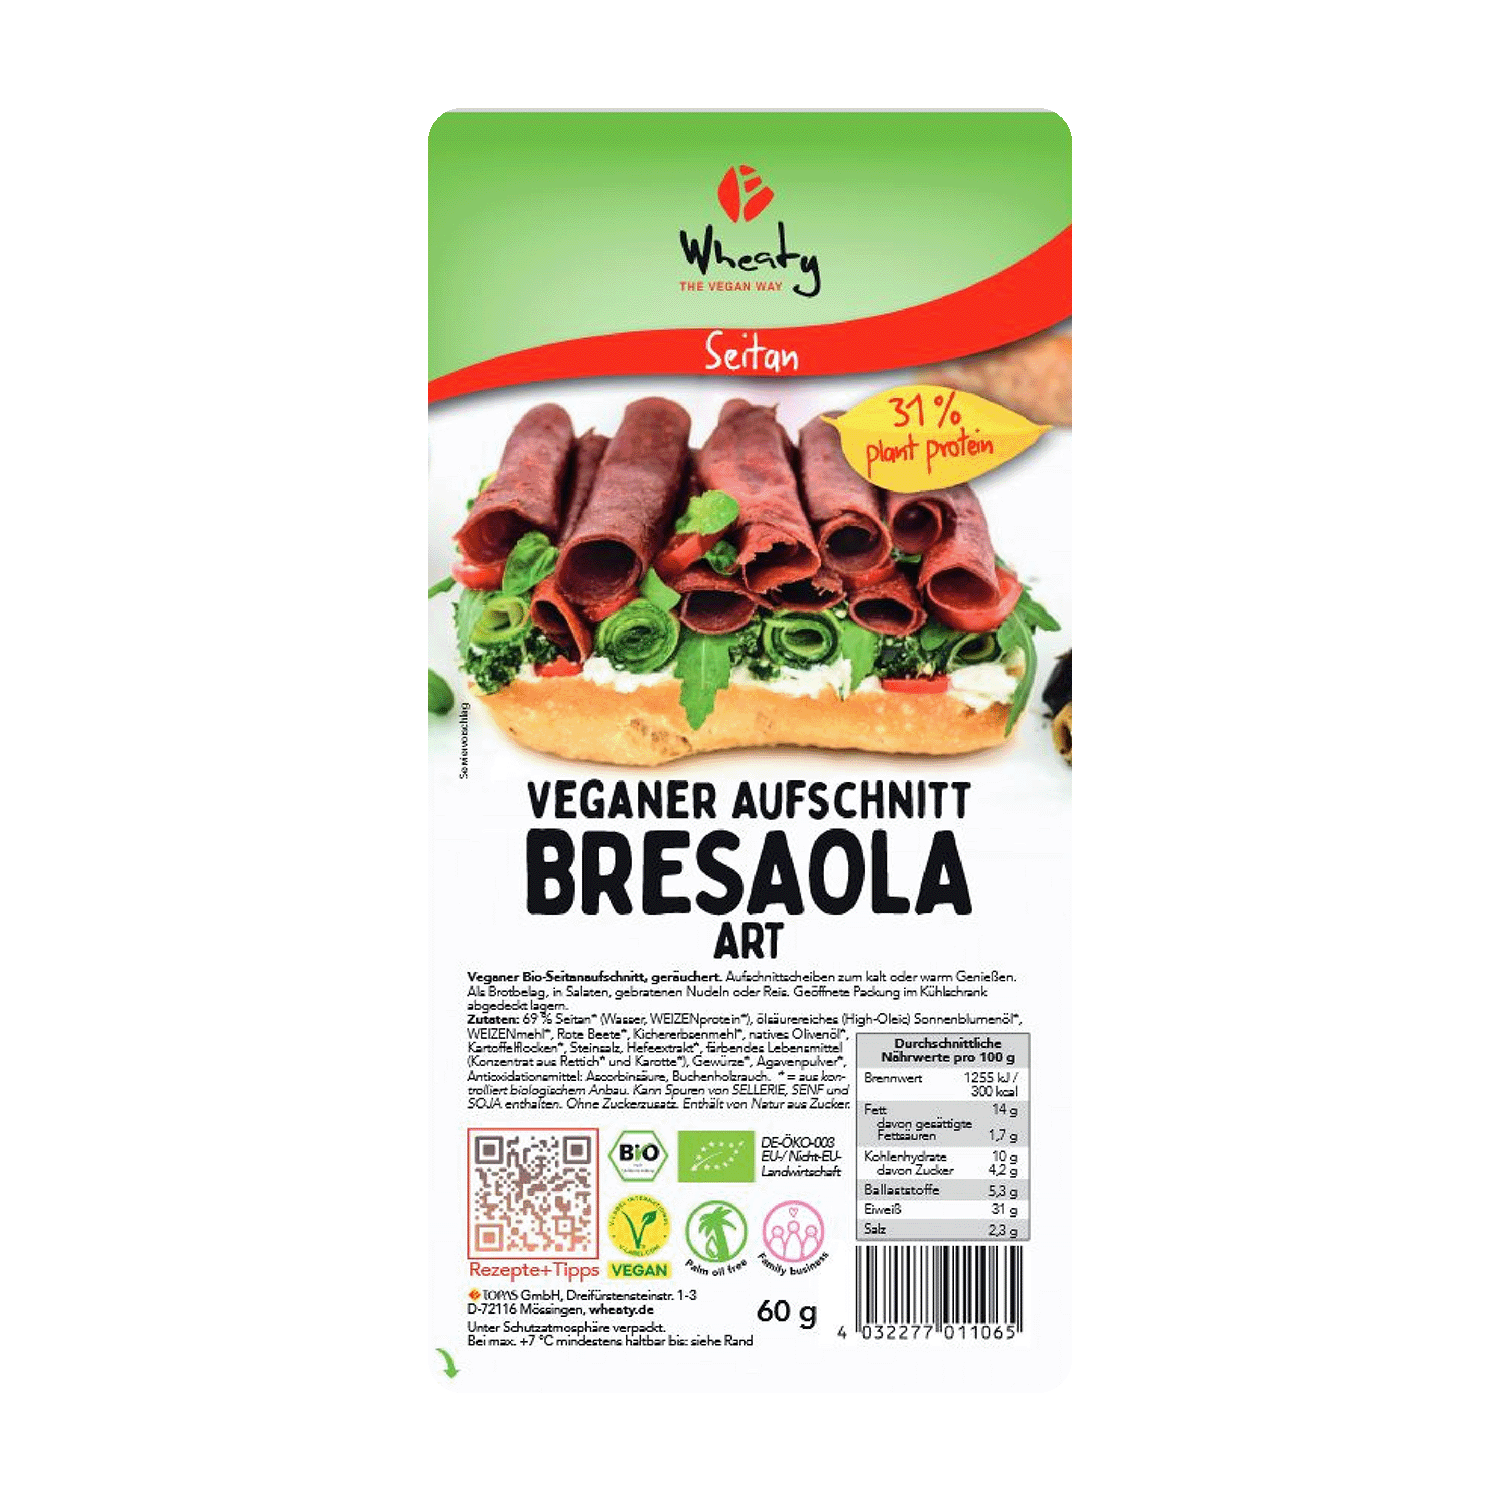 vegan cold cuts Bresaola style, Organic, 60g